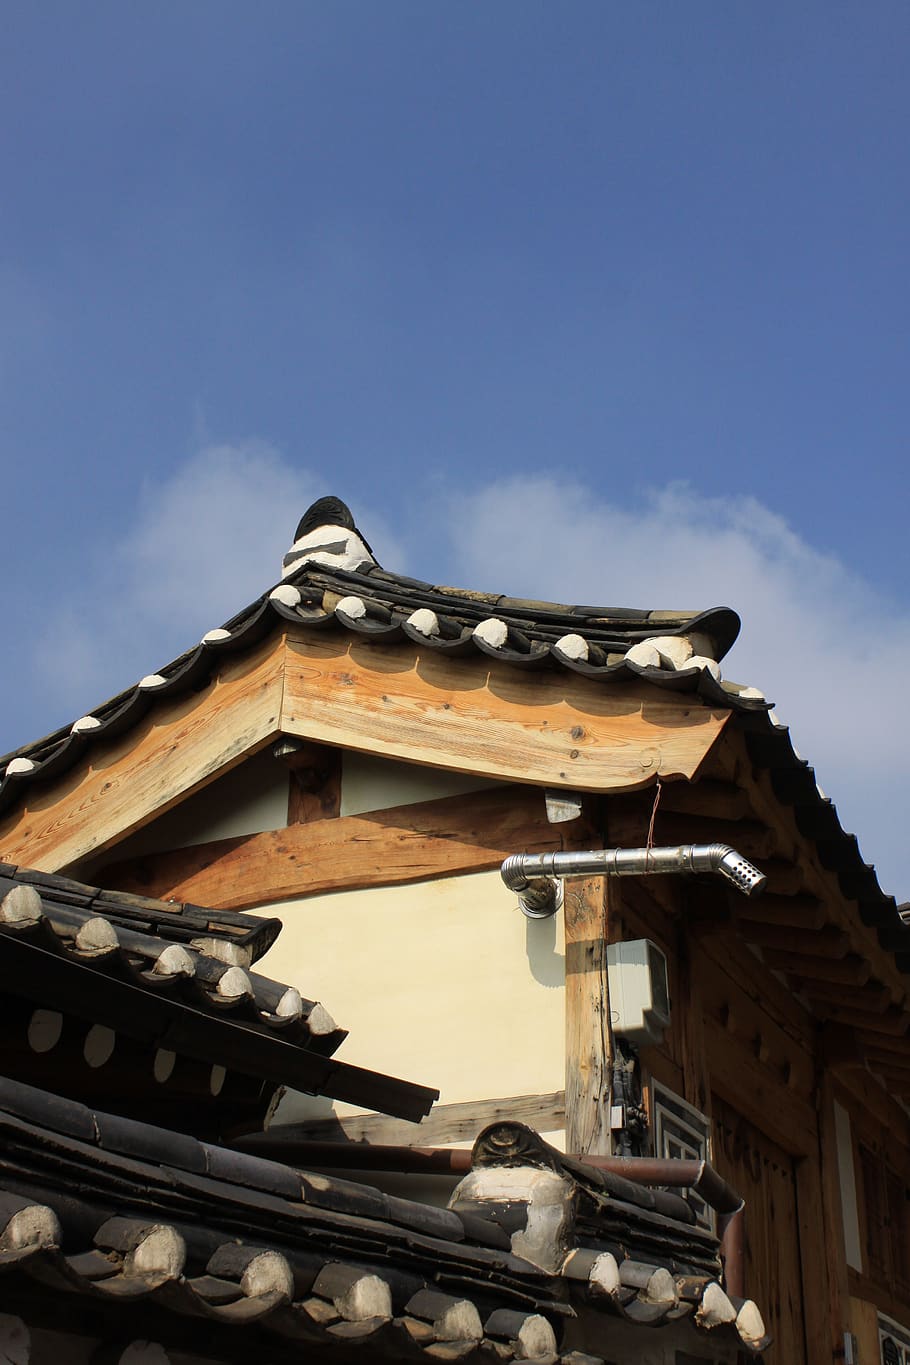 hanok, traditional, houses, republic of korea, korea, construction, roof tile, korea culture, sky, architecture